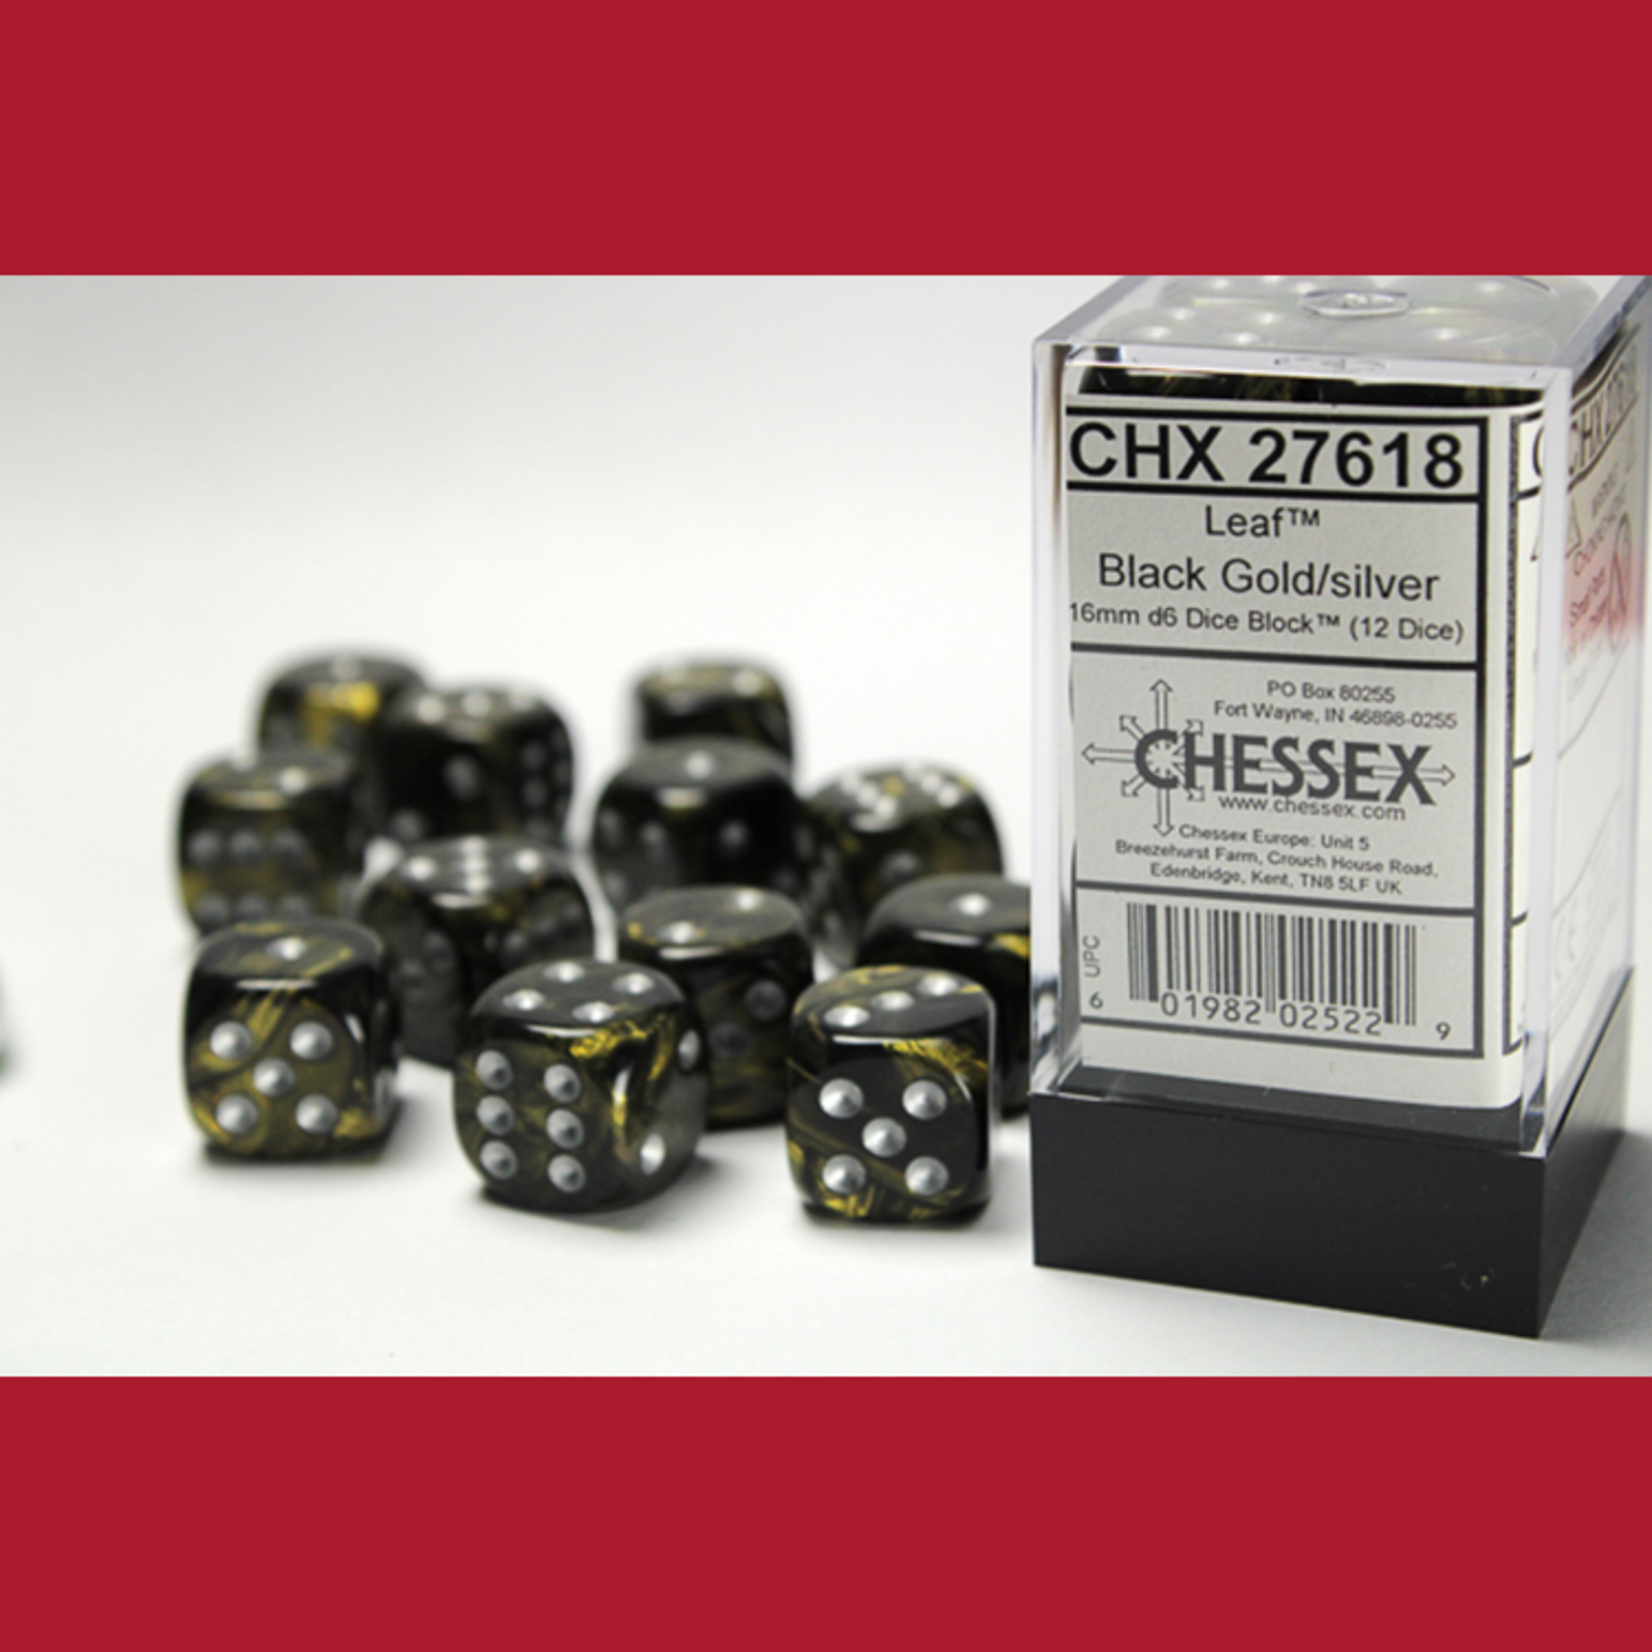 Chessex CHX 27618 Leaf Black-Gold/Silver 16mm (12d6)